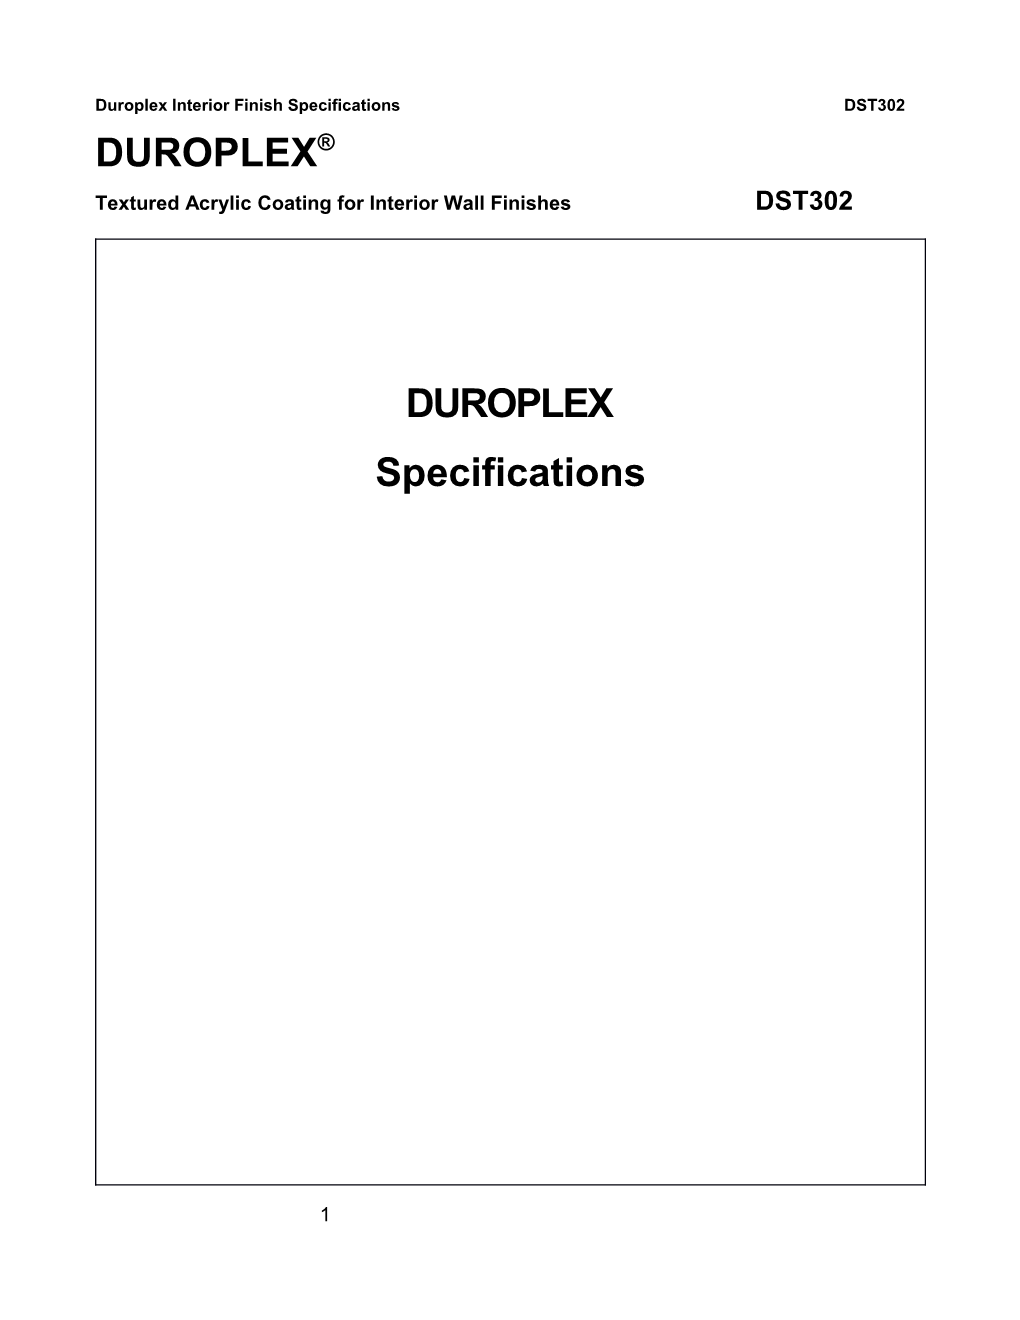 DST302 Duroplex Specificatons - Dryvit